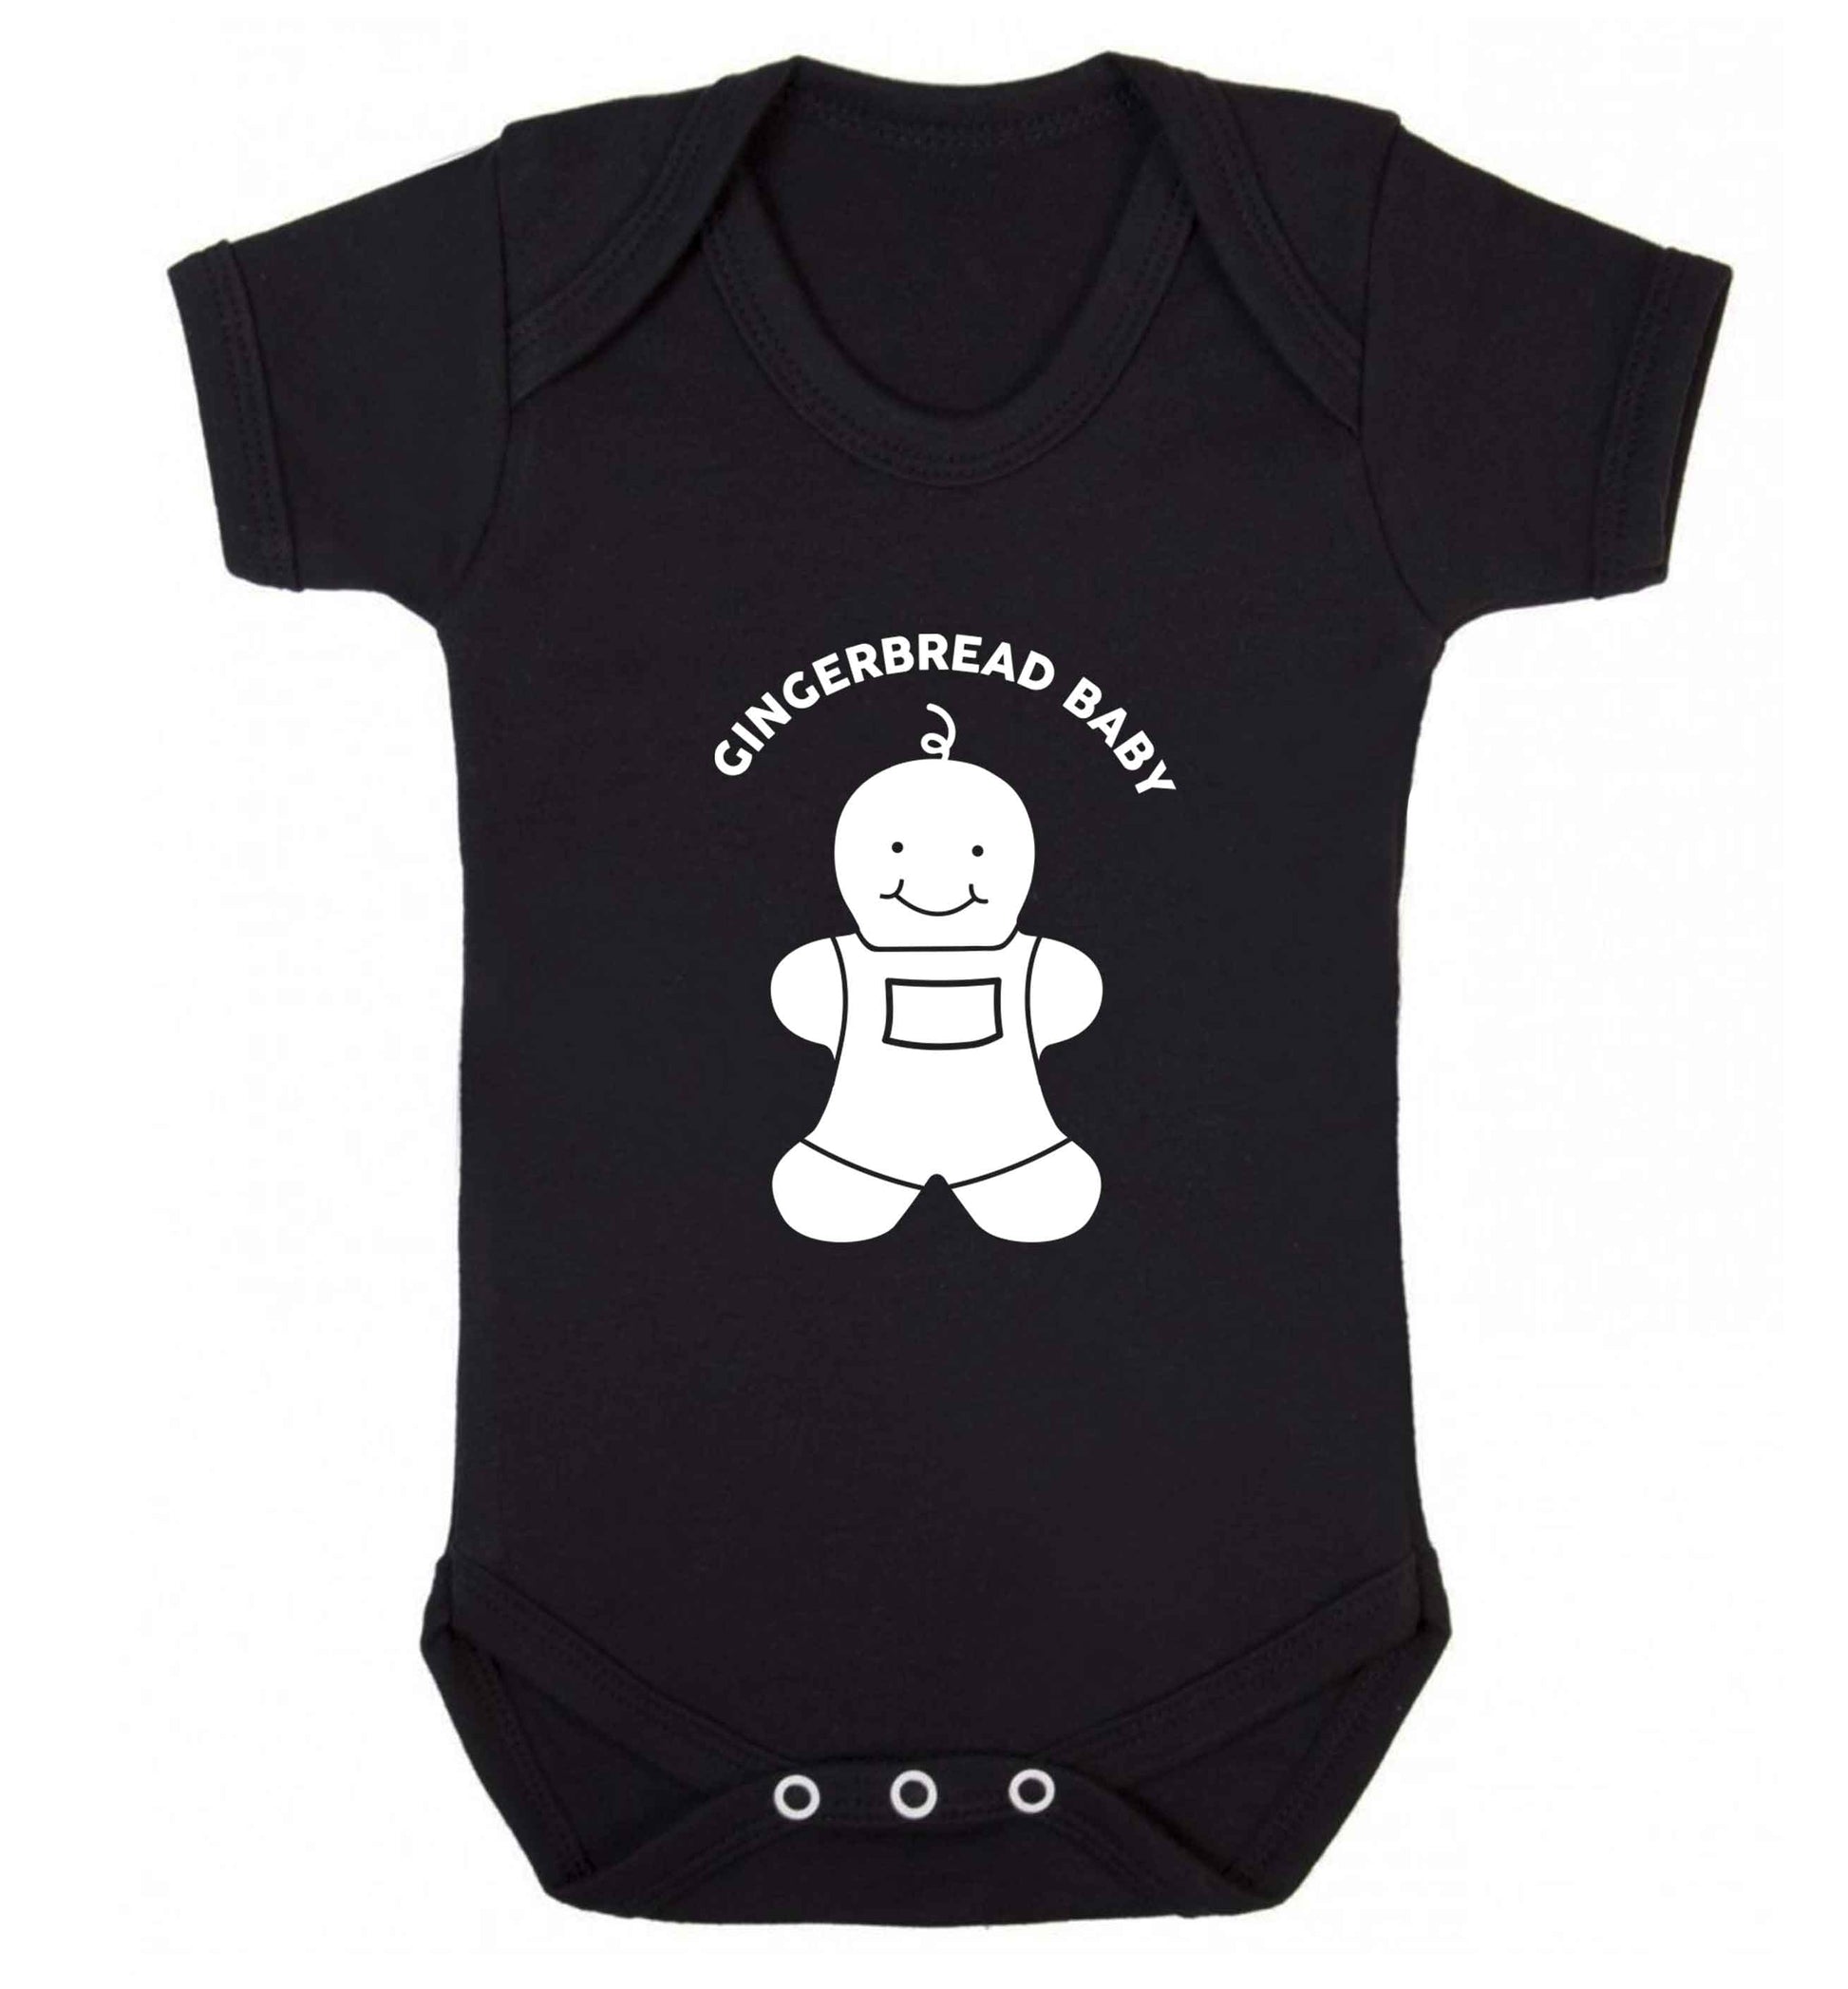 Gingerbread baby baby vest black 18-24 months